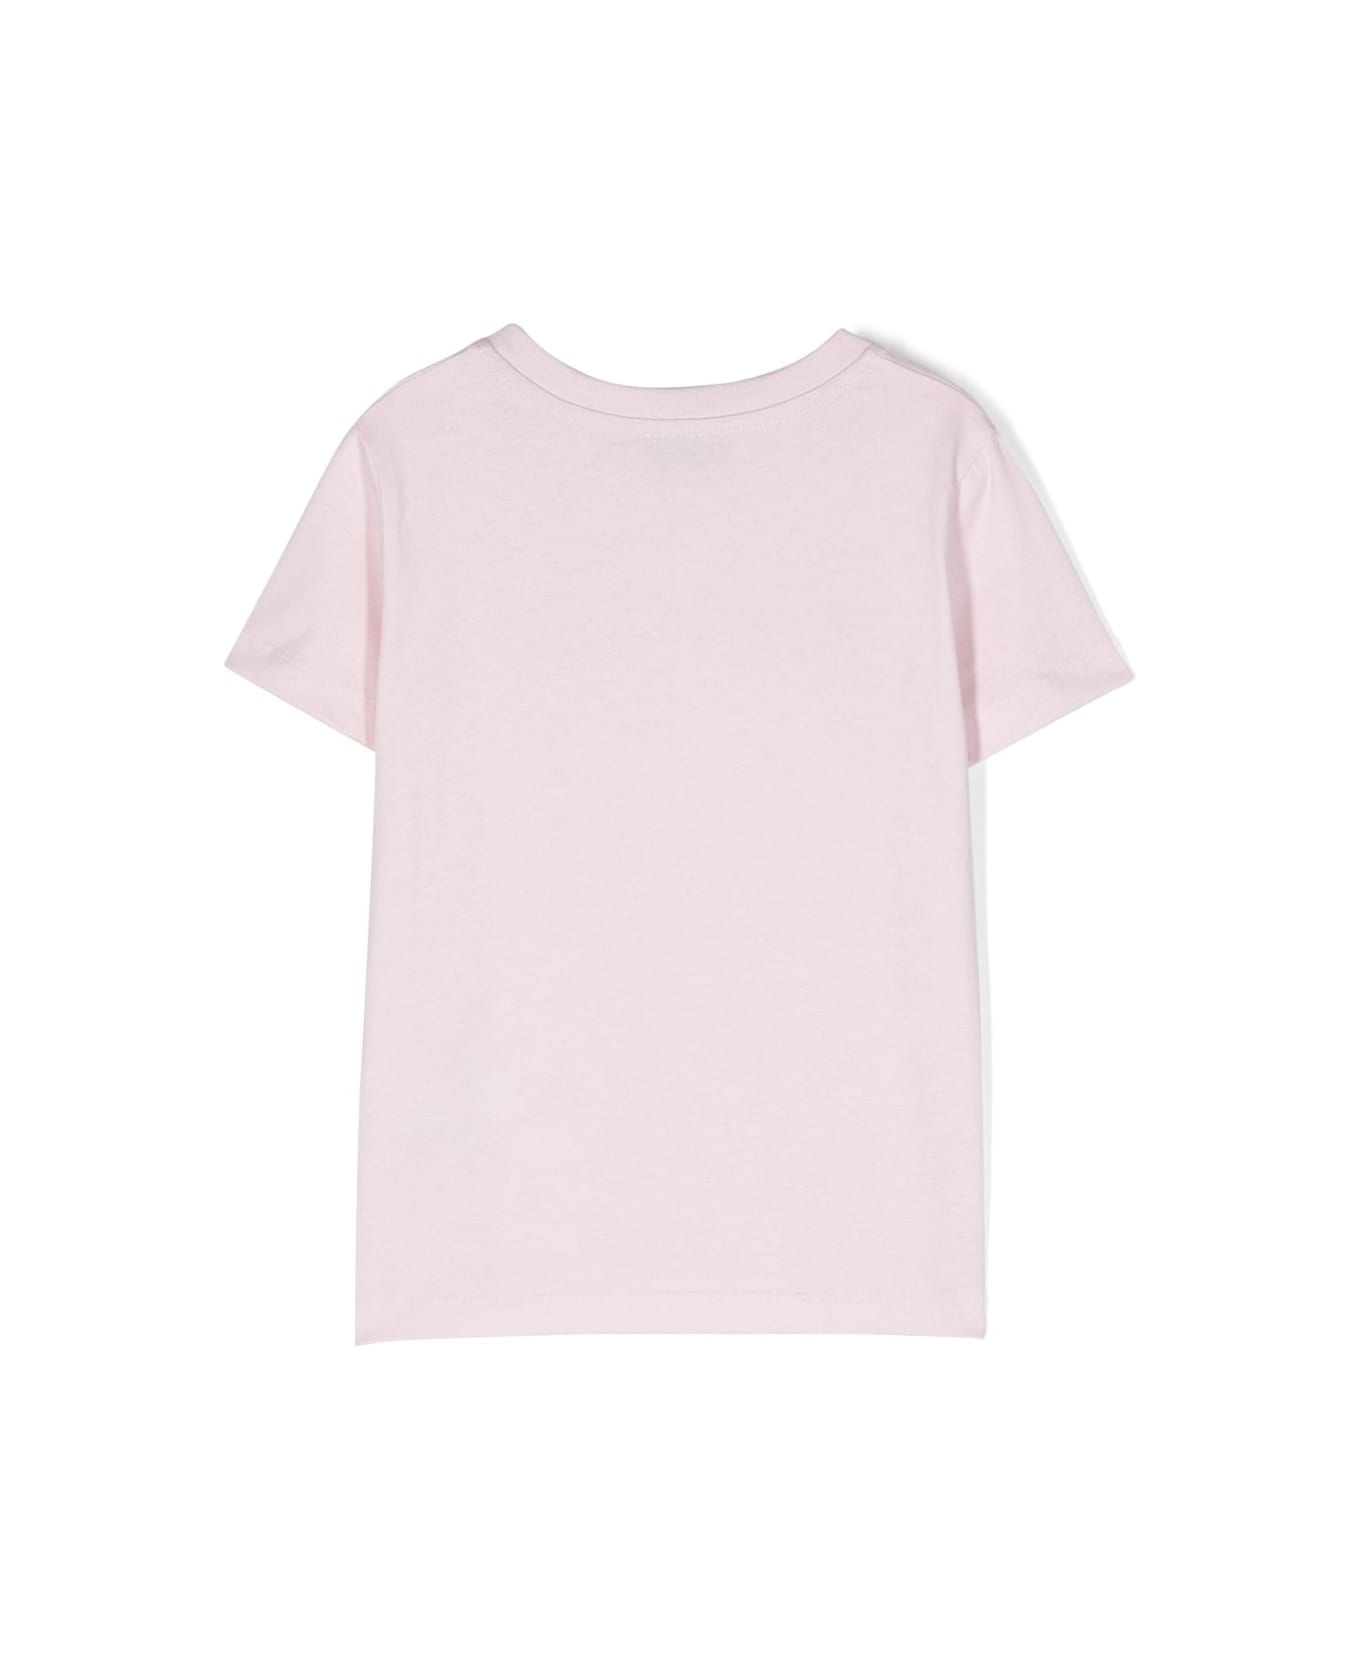 Missoni Kids Printed T-shirt - Pink